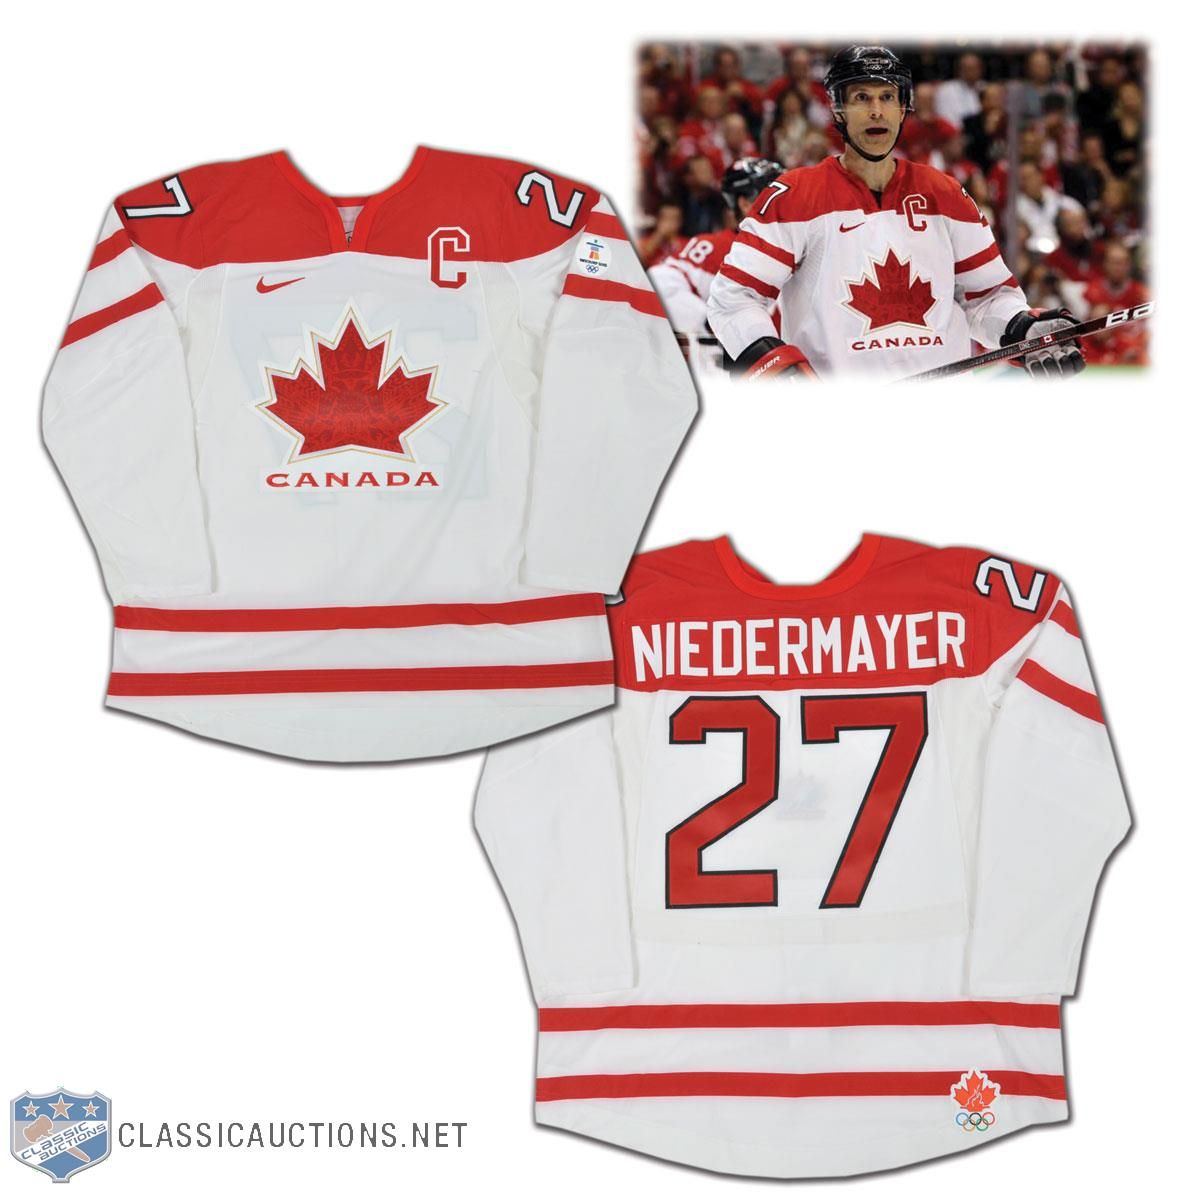 27  Scott Niedermayer - Olympics 2010 - icethetics.info